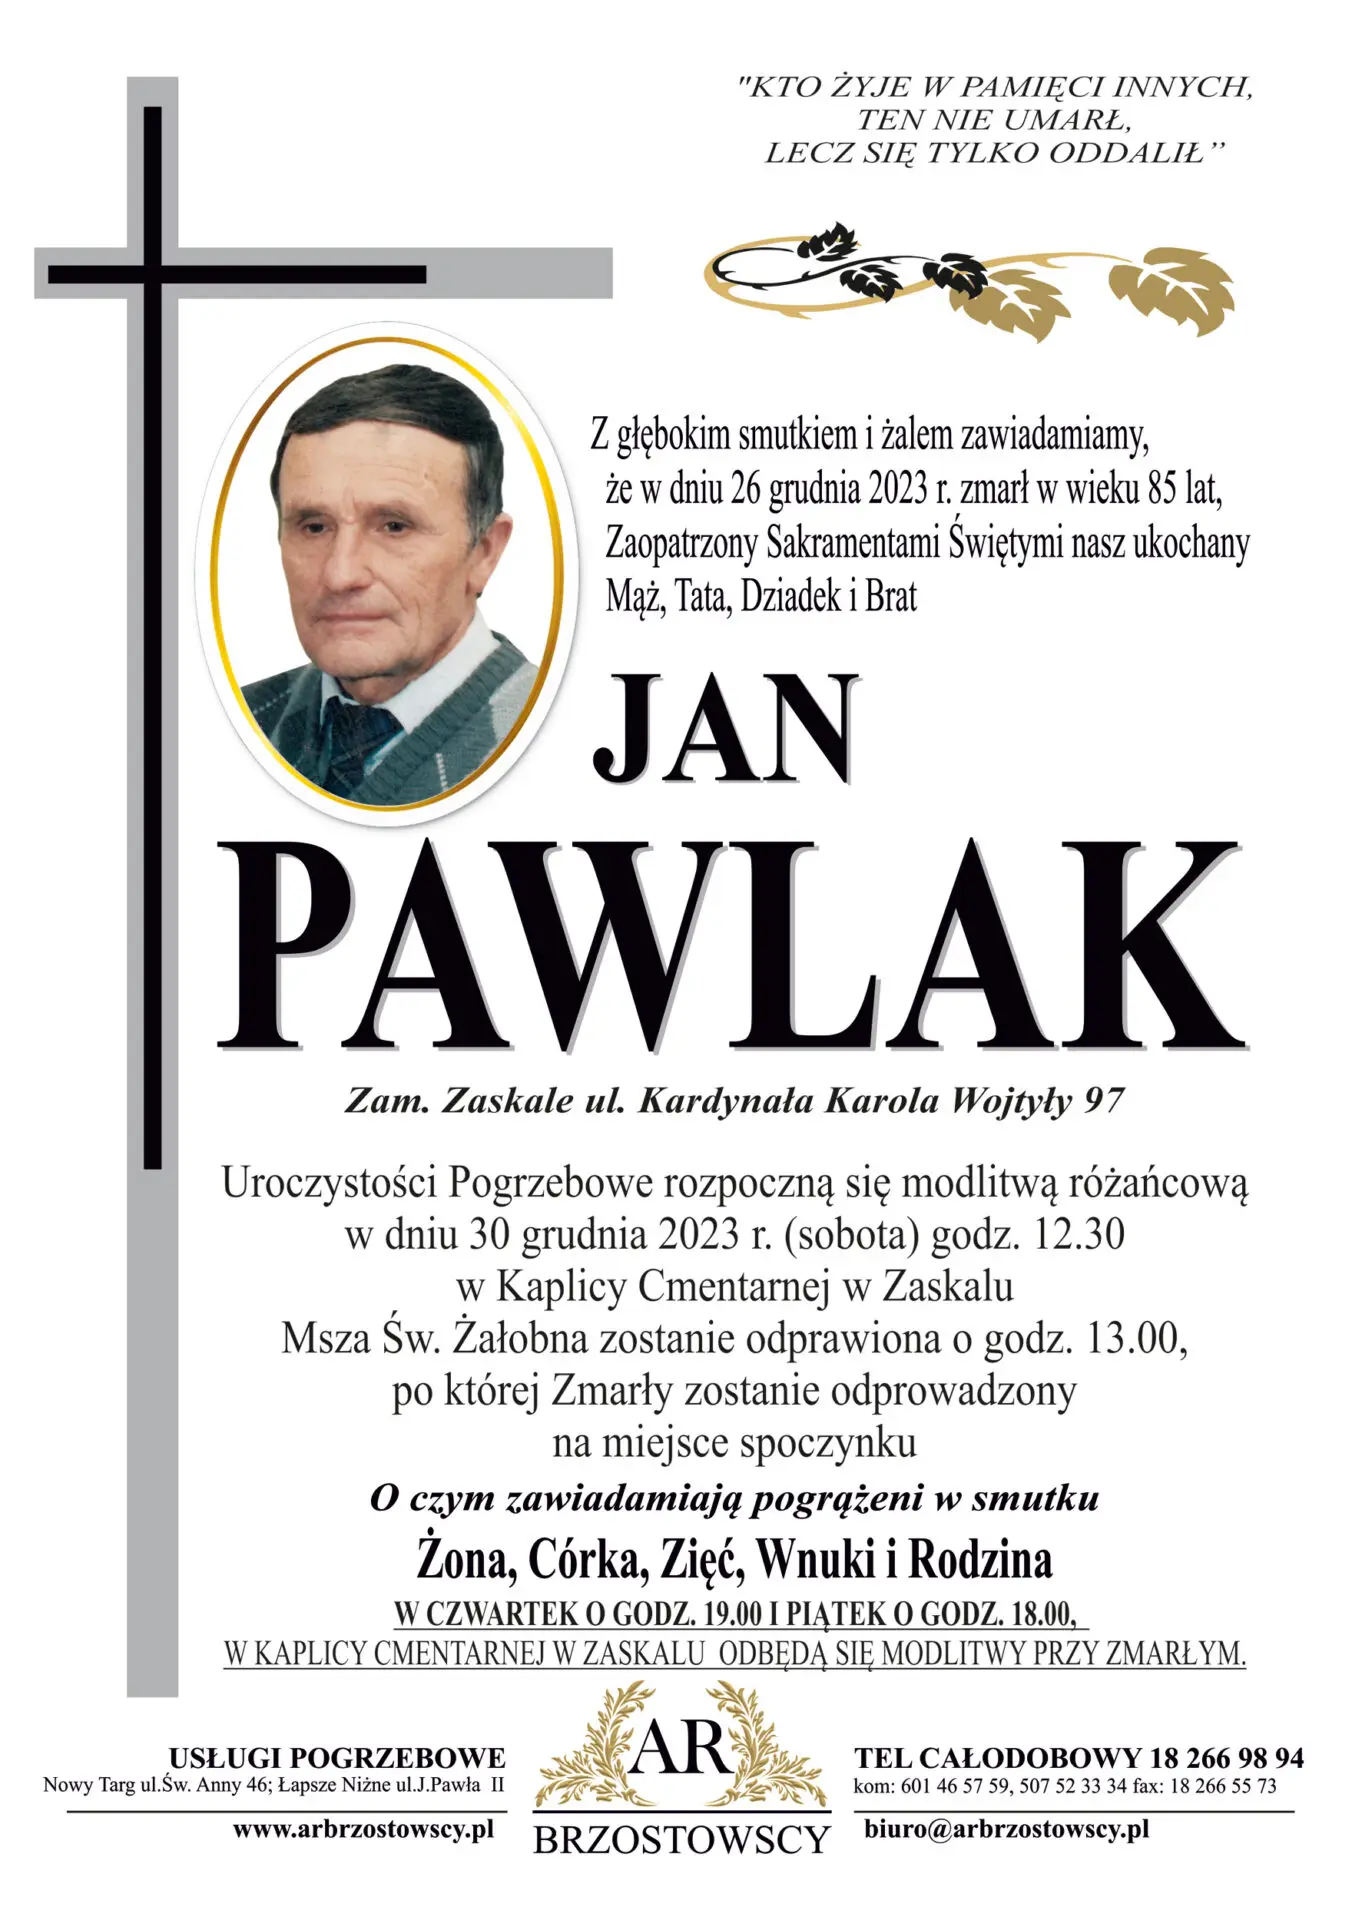 Jan Pawlak